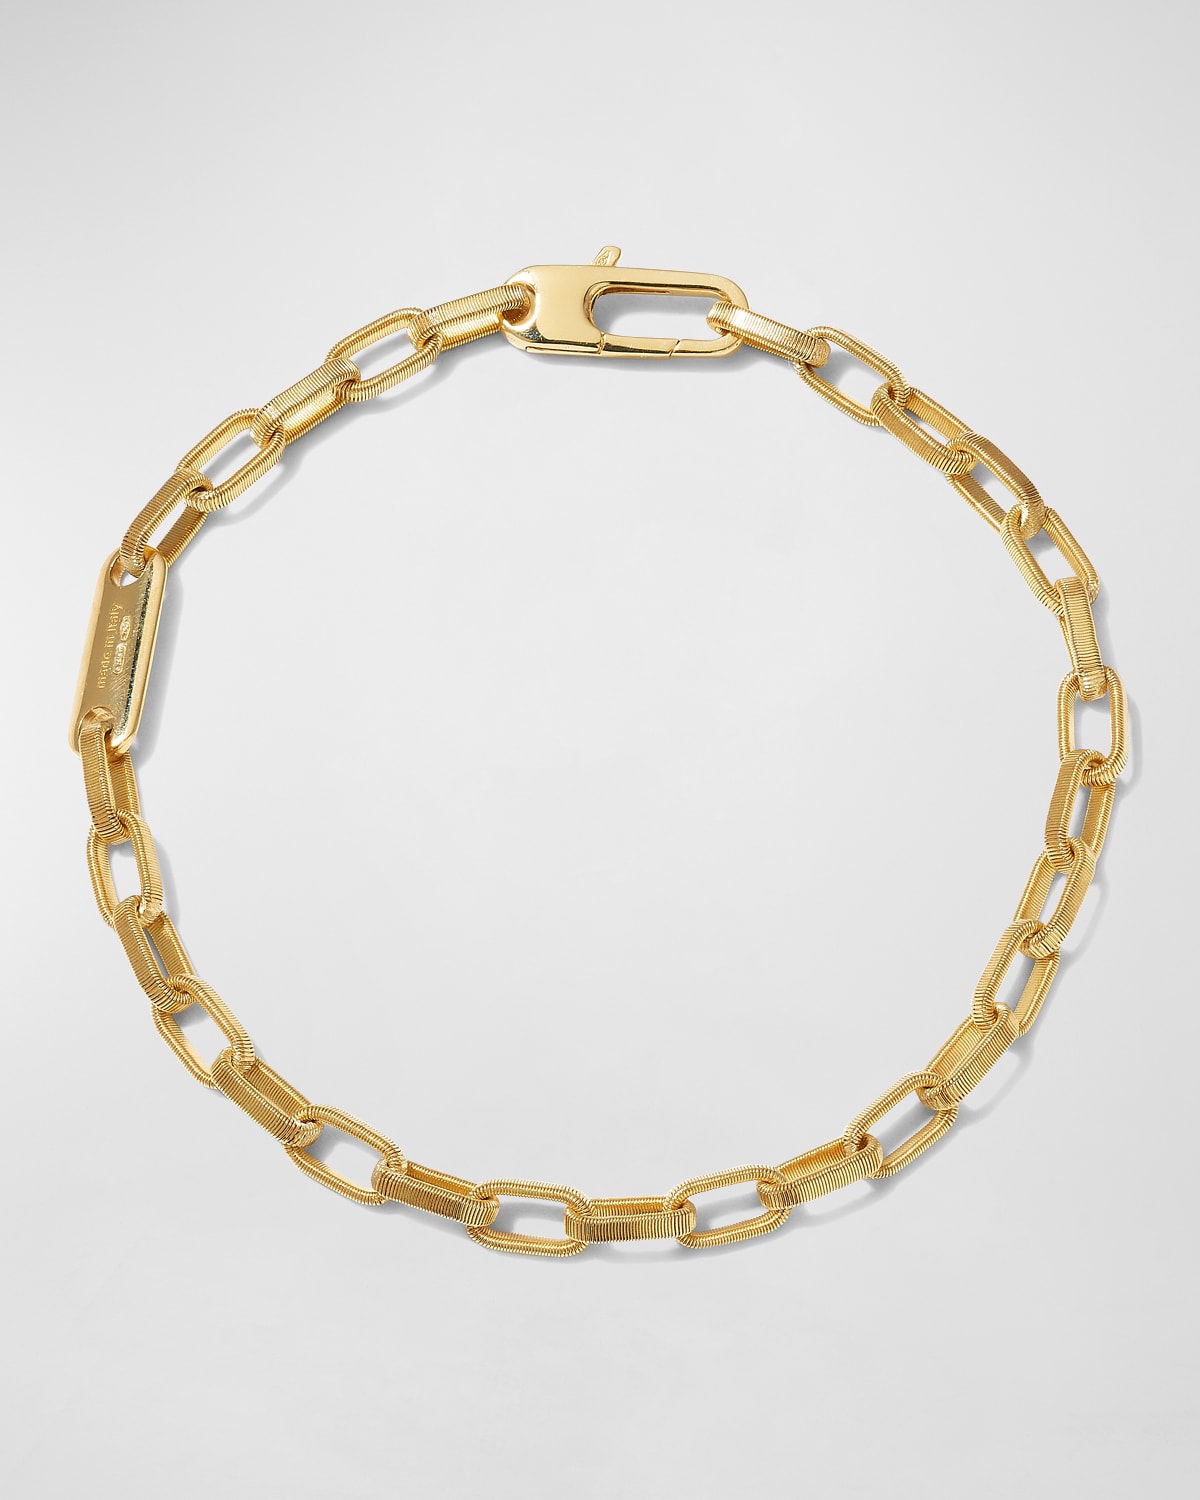 Marco Bicego 18k Yellow Gold Uomo Men's Medium Coiled Open Chain Link Bracelet